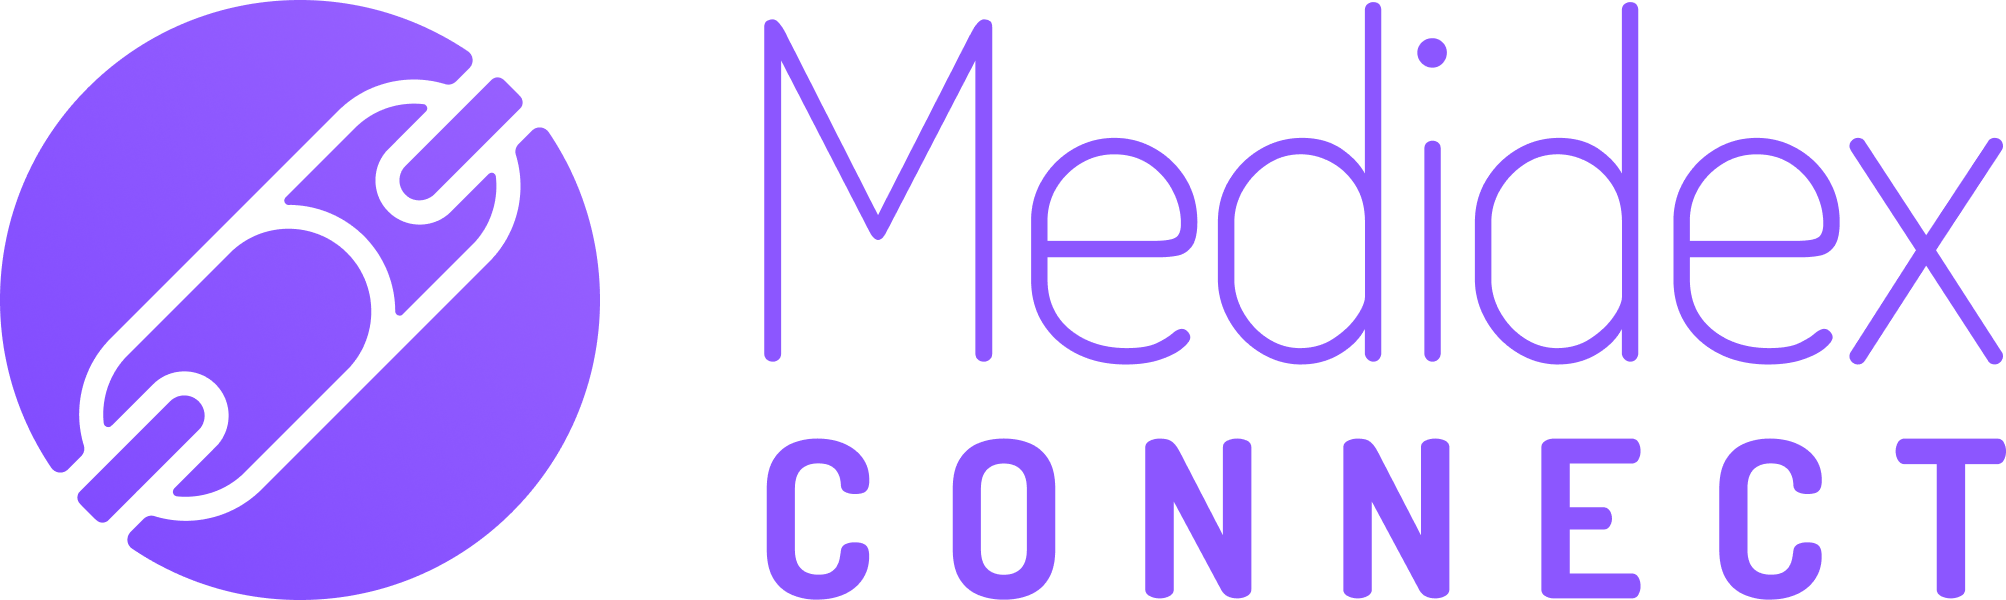 Medidex Connect